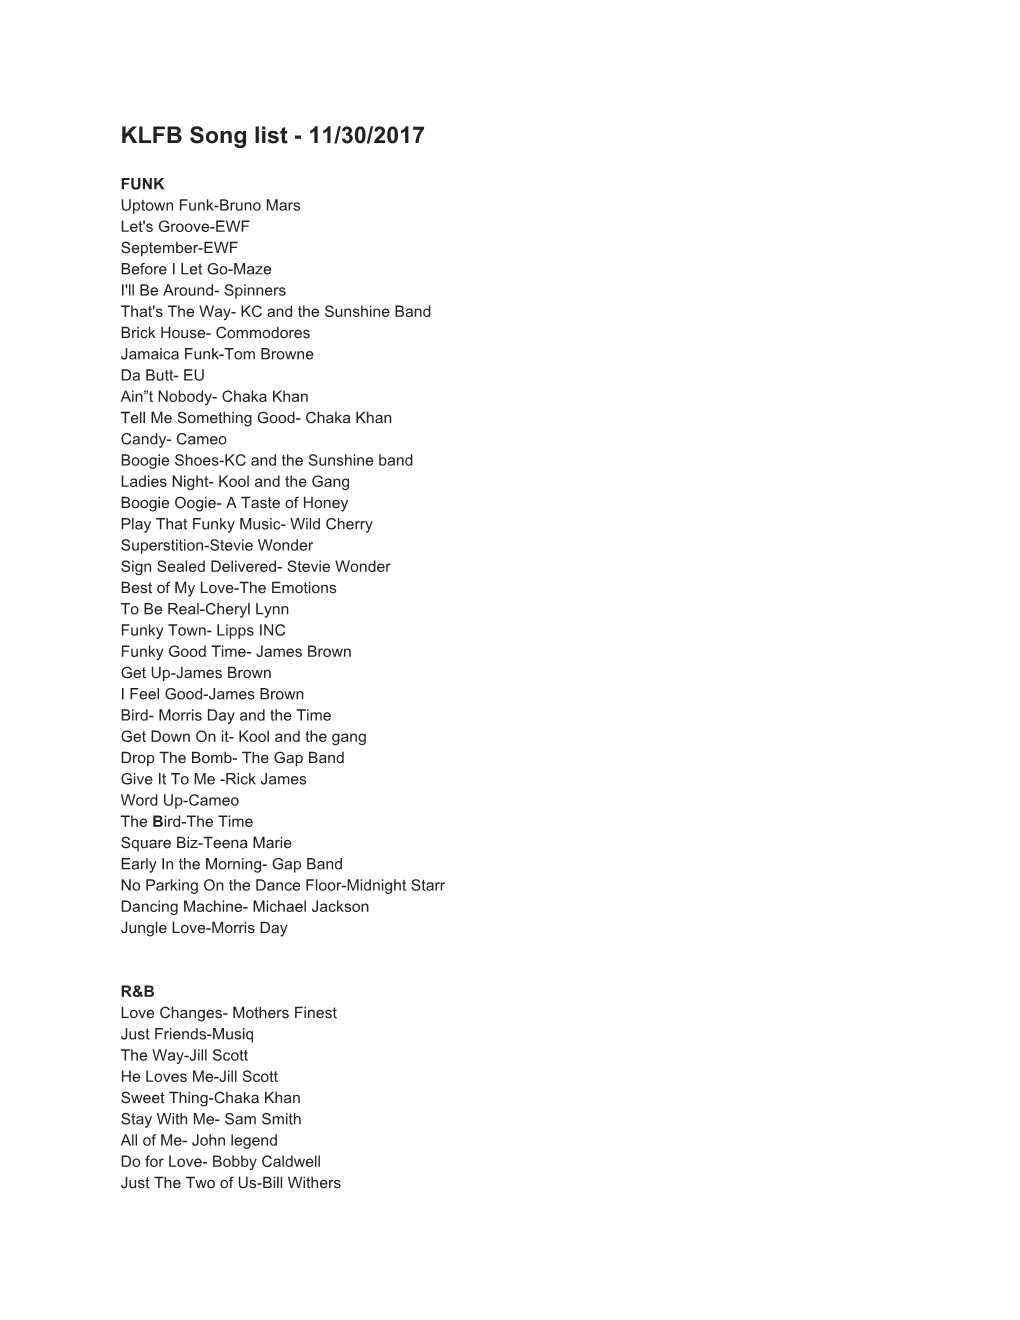 KLFB Song List - 11/30/2017